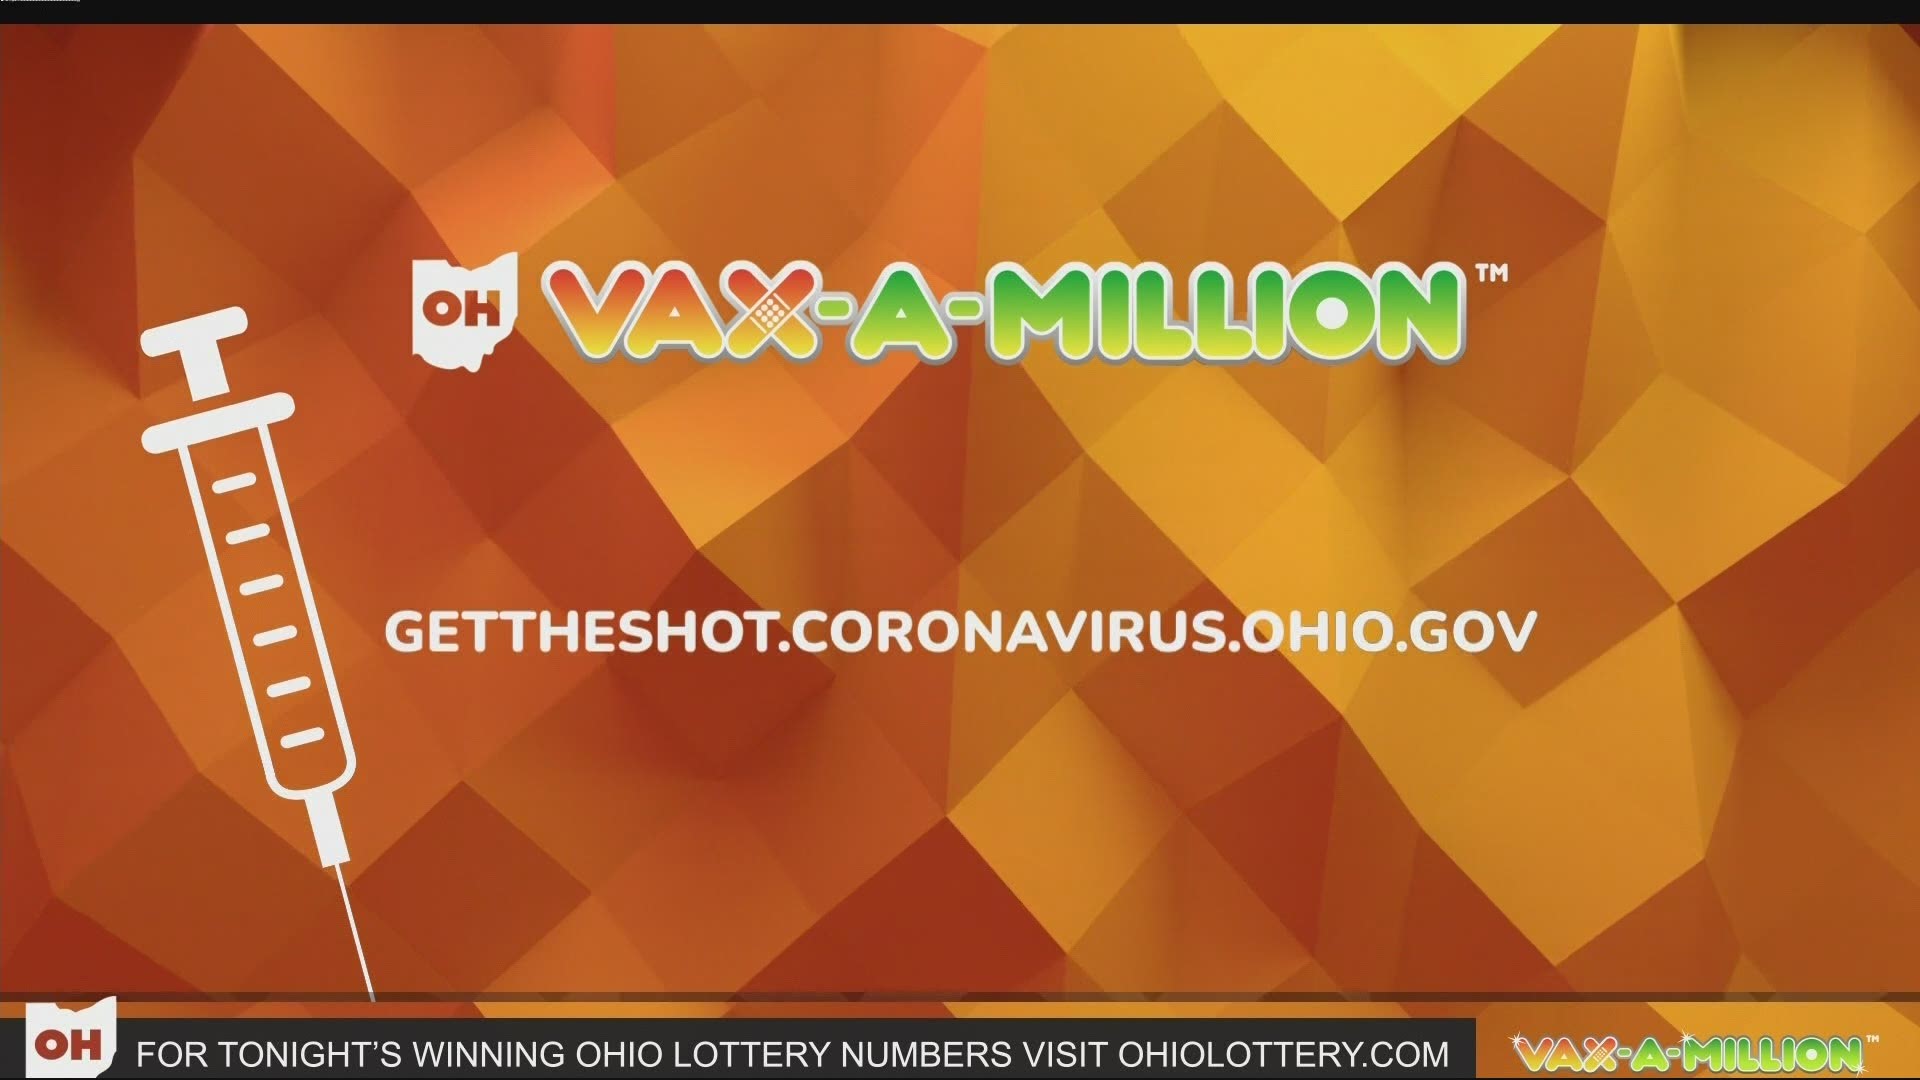 The winner of the $1 million comes from Hamilton County near Cincinnati